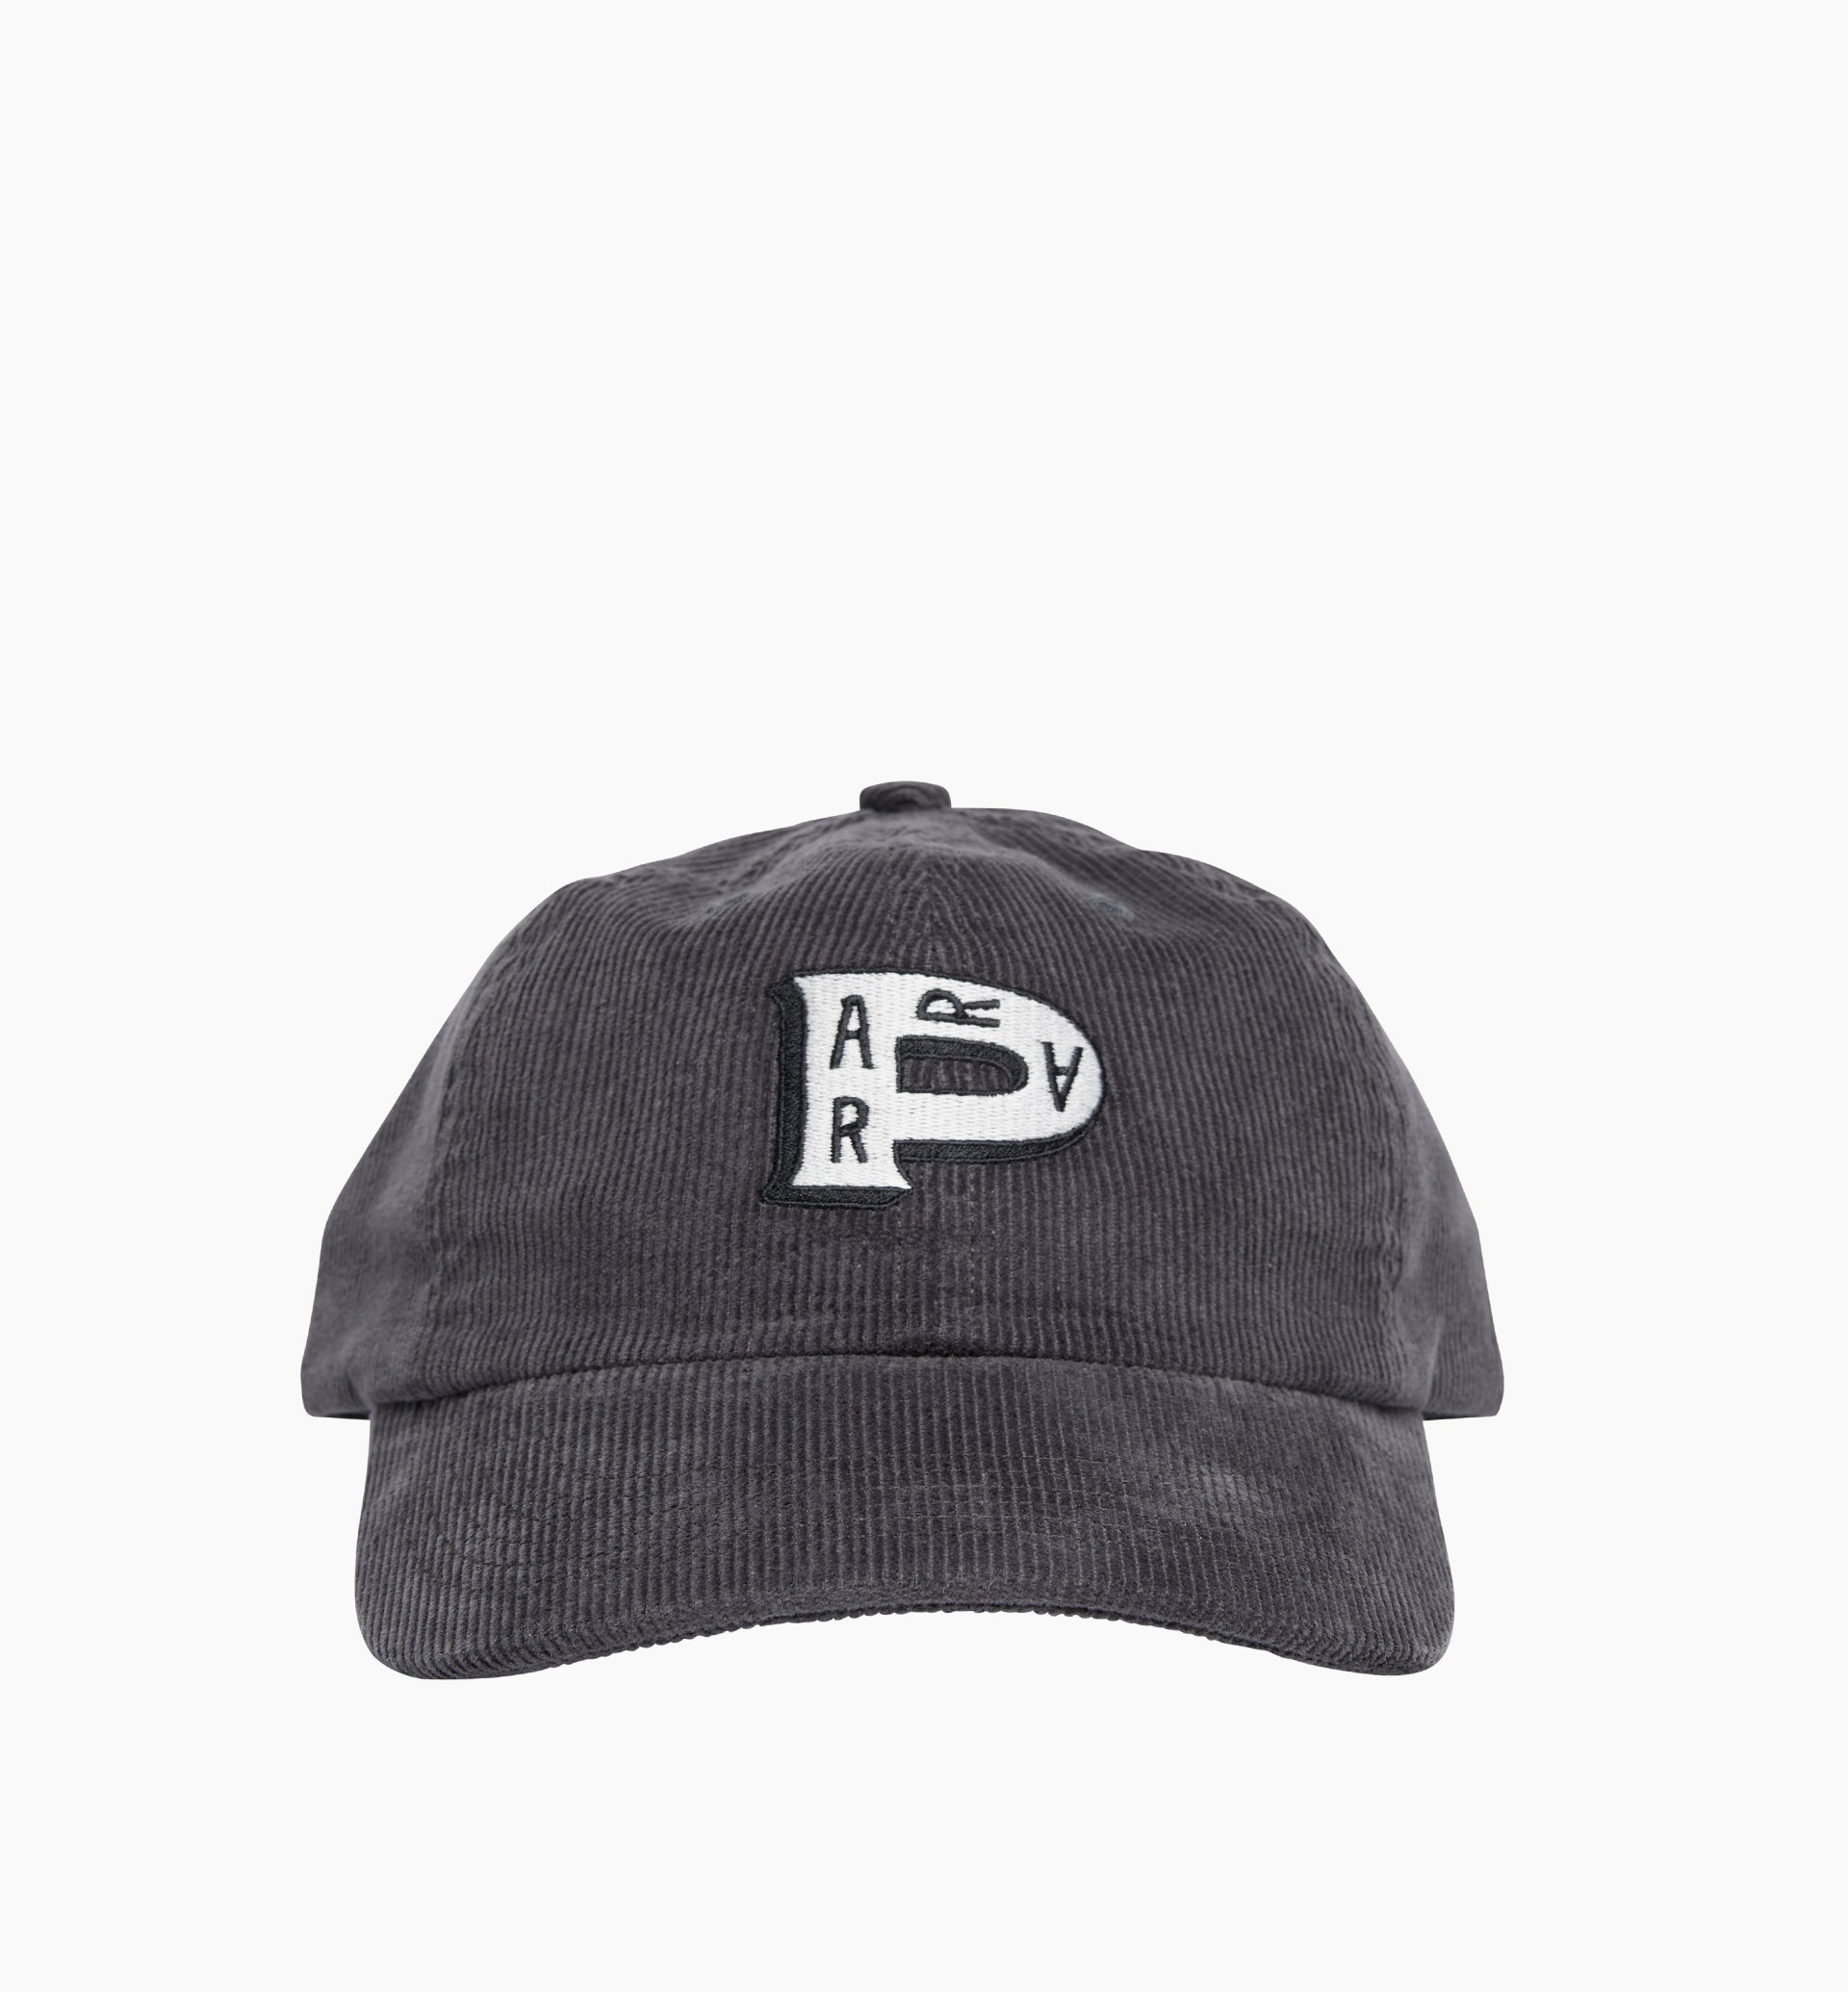 Parra - worked P 6 panel hat